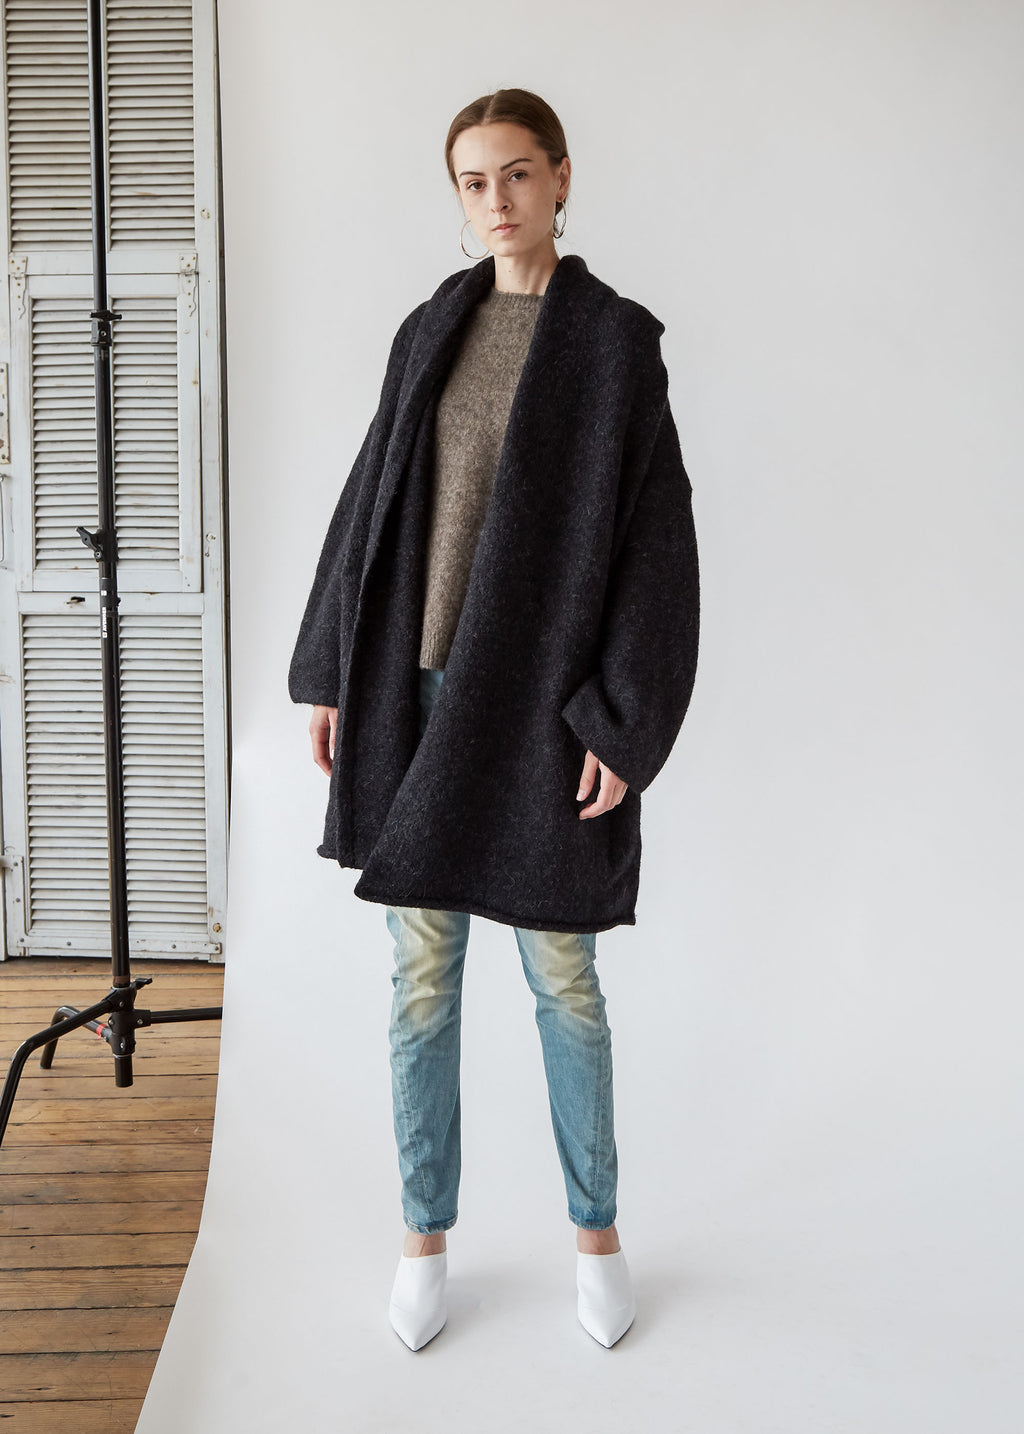 New Arrivals - Women's Contemporary, Modern Designer Fashion – Finefolk